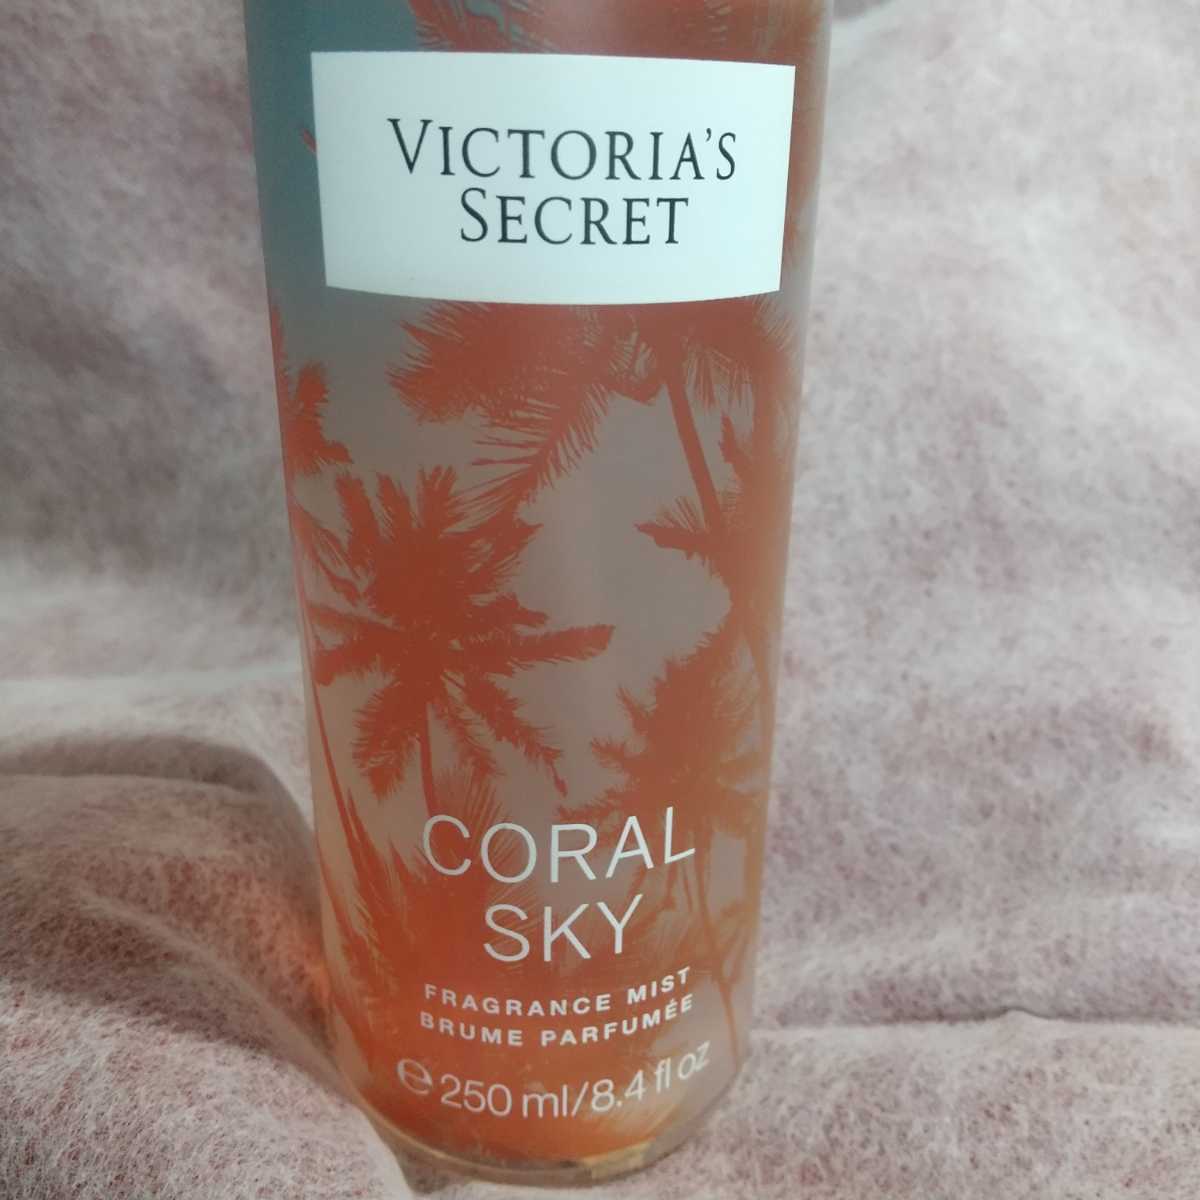  Victoria Secret коралл Sky аромат Mist 250ml VICTORIA\'S SECRET CORAL SKY FRAGRANCE MIST